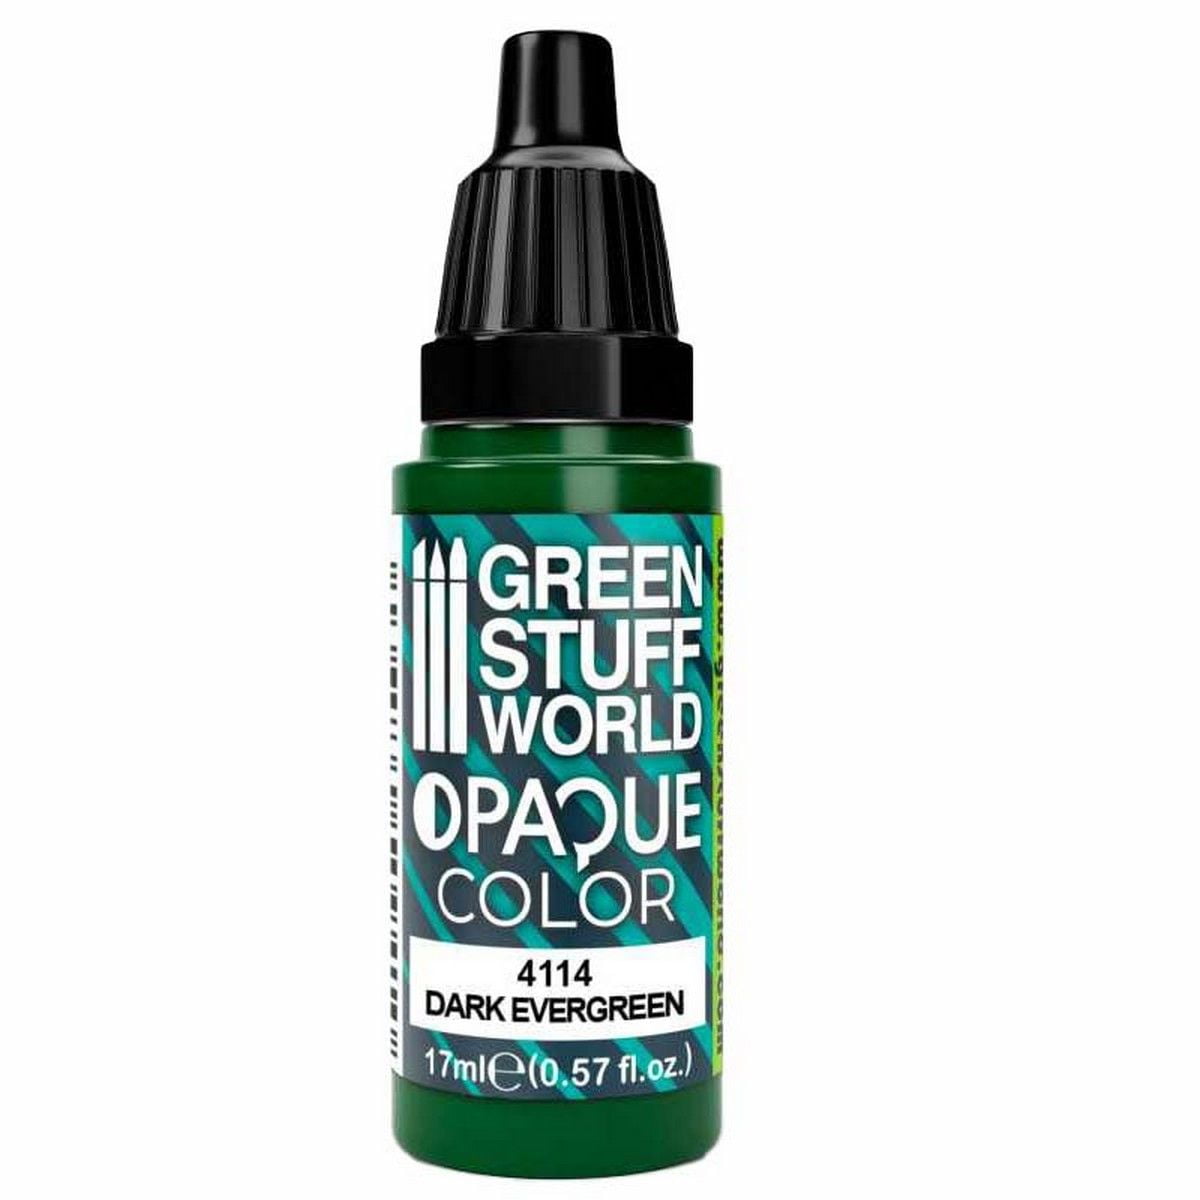 Opaque Colors - Dark Evergreen - 17ml